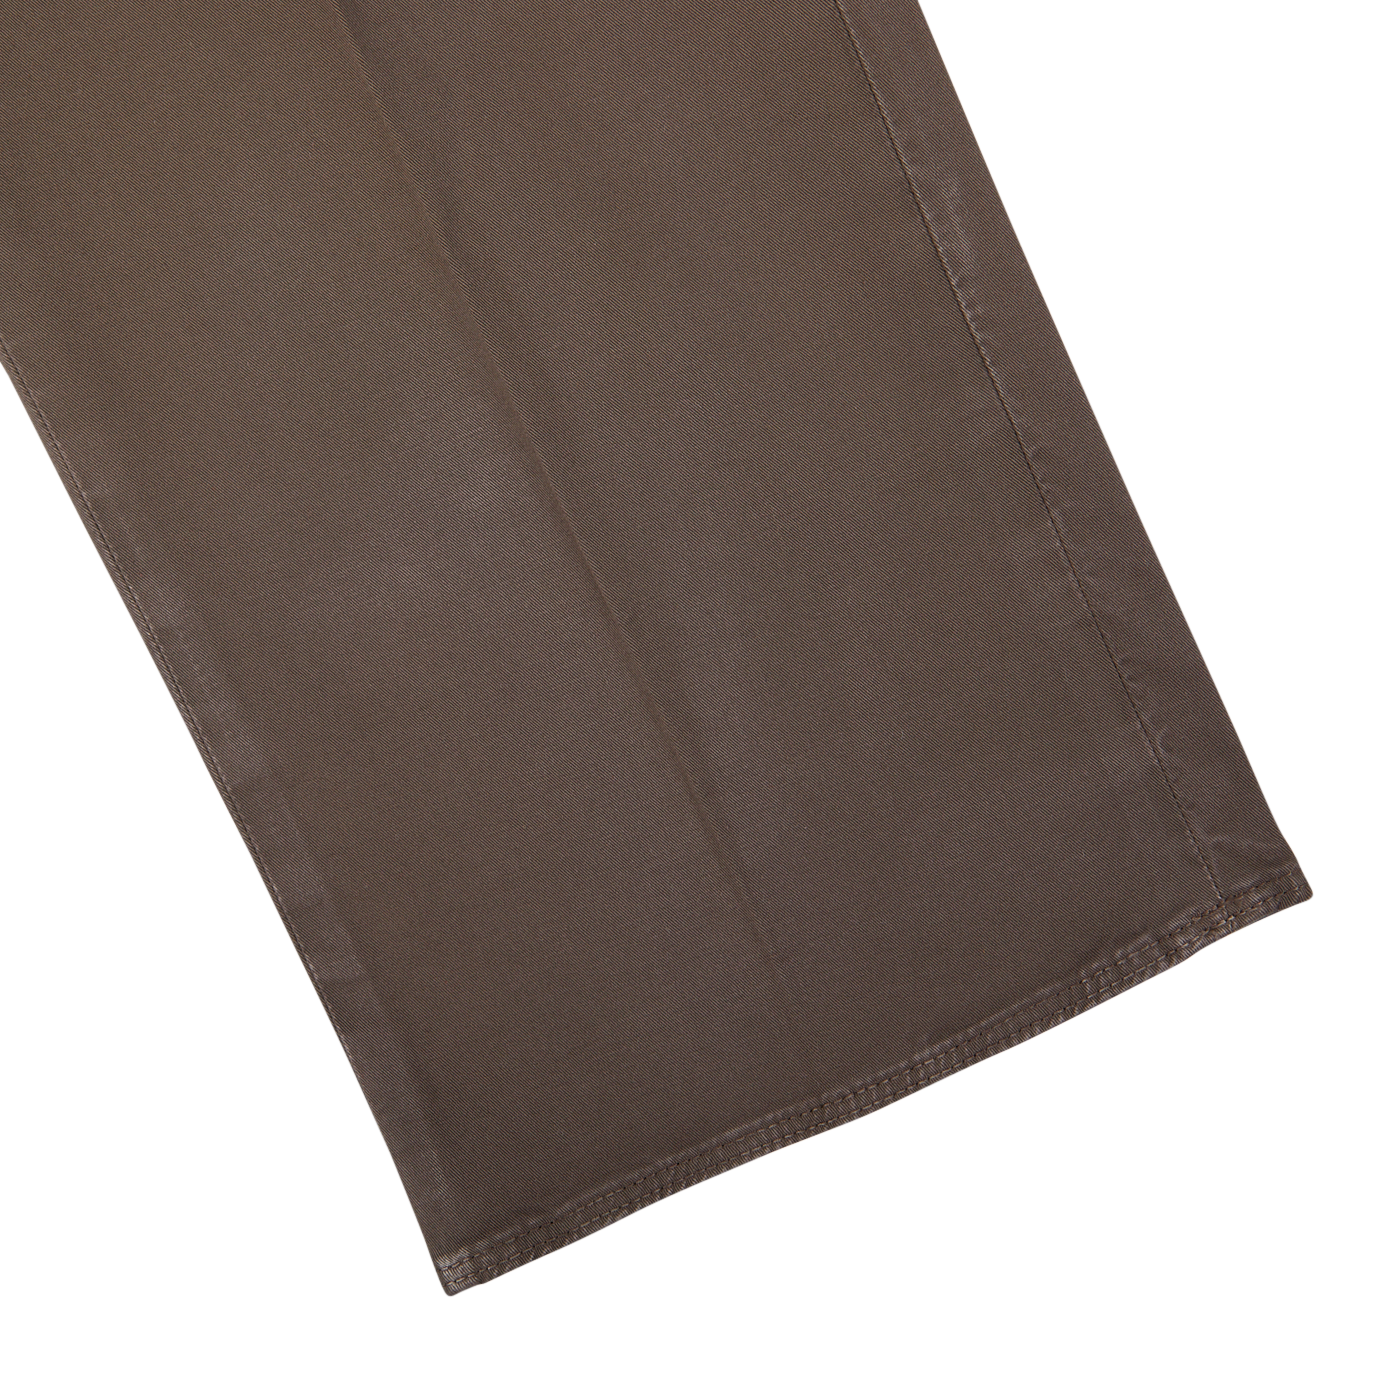 Incotex Dark Brown Cotton Stretch Regular Chinos fabric sleeve on a white background.